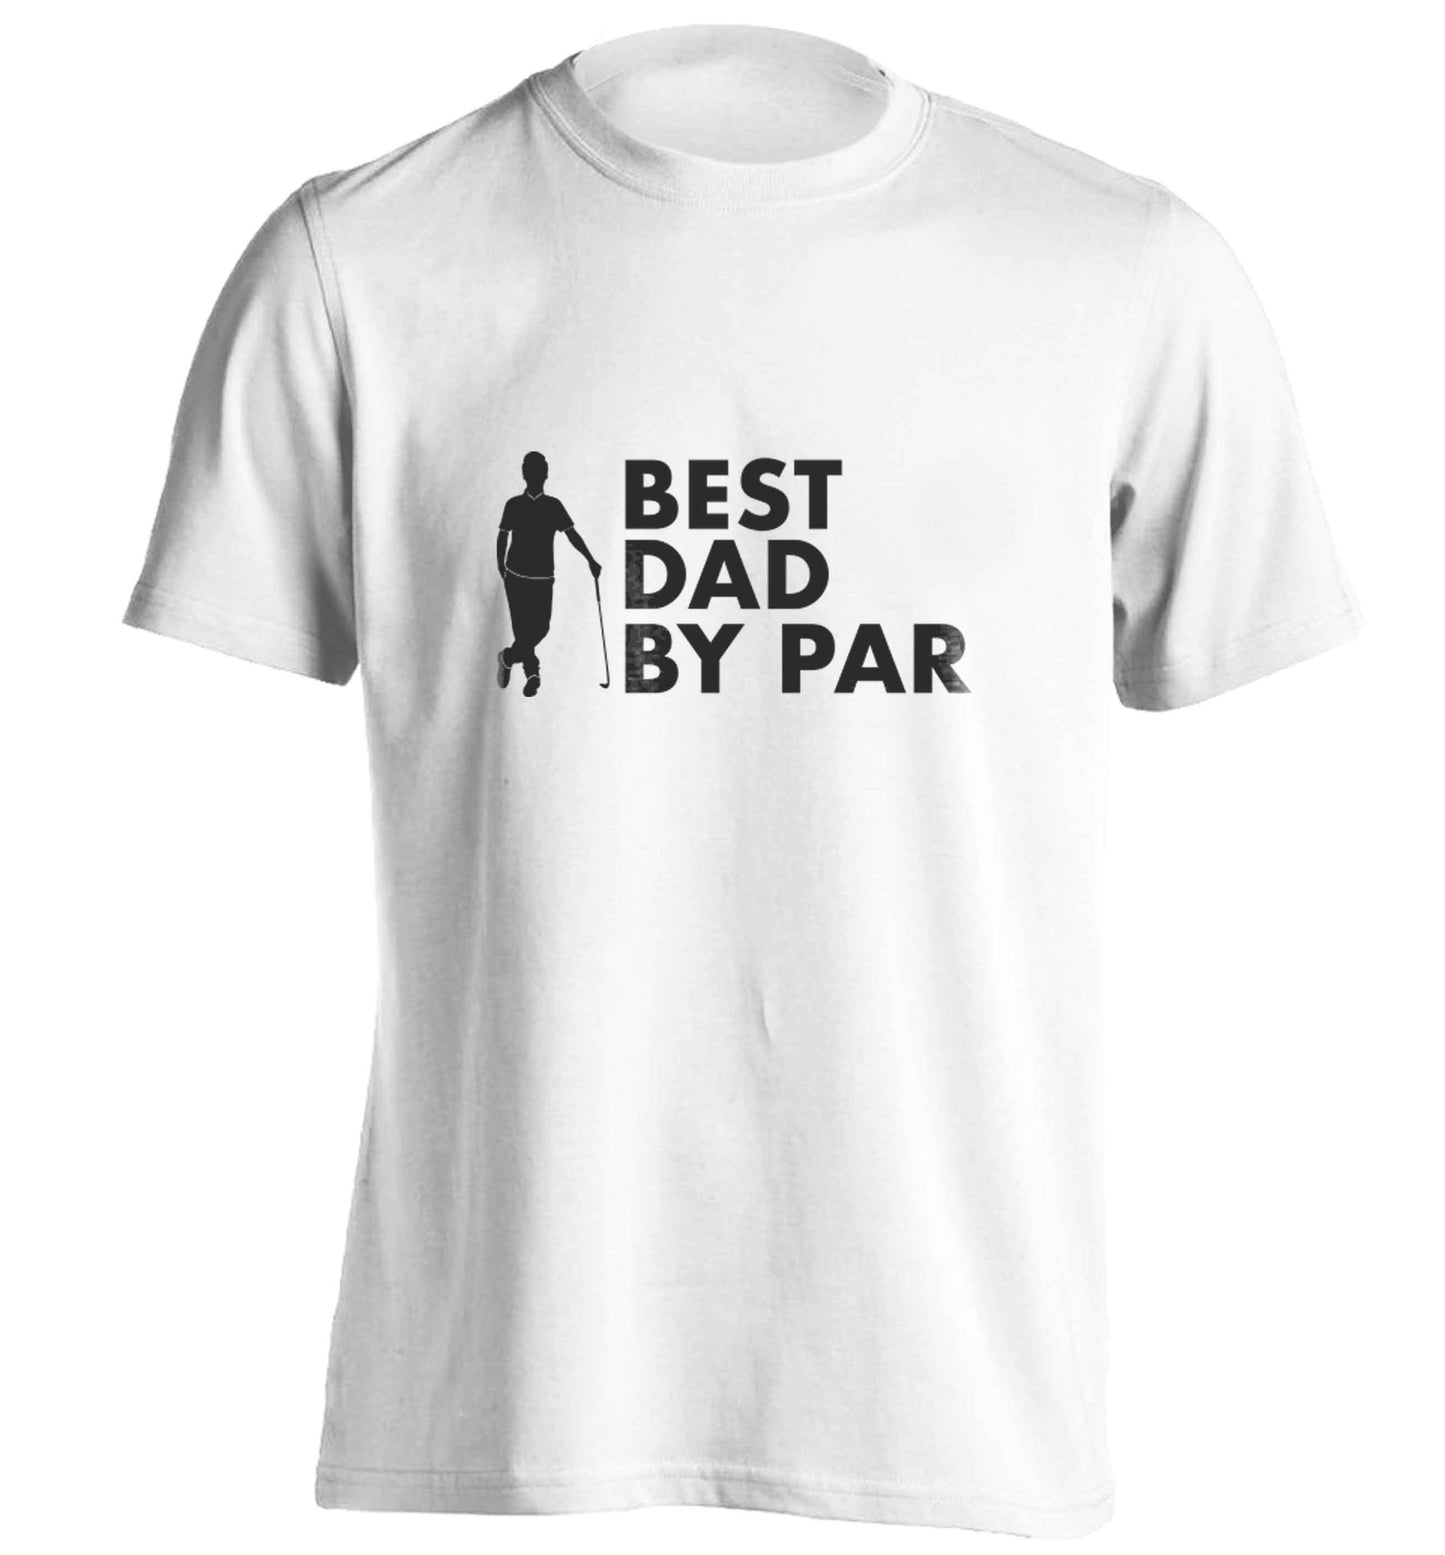 Best dad by par adults unisex white Tshirt 2XL